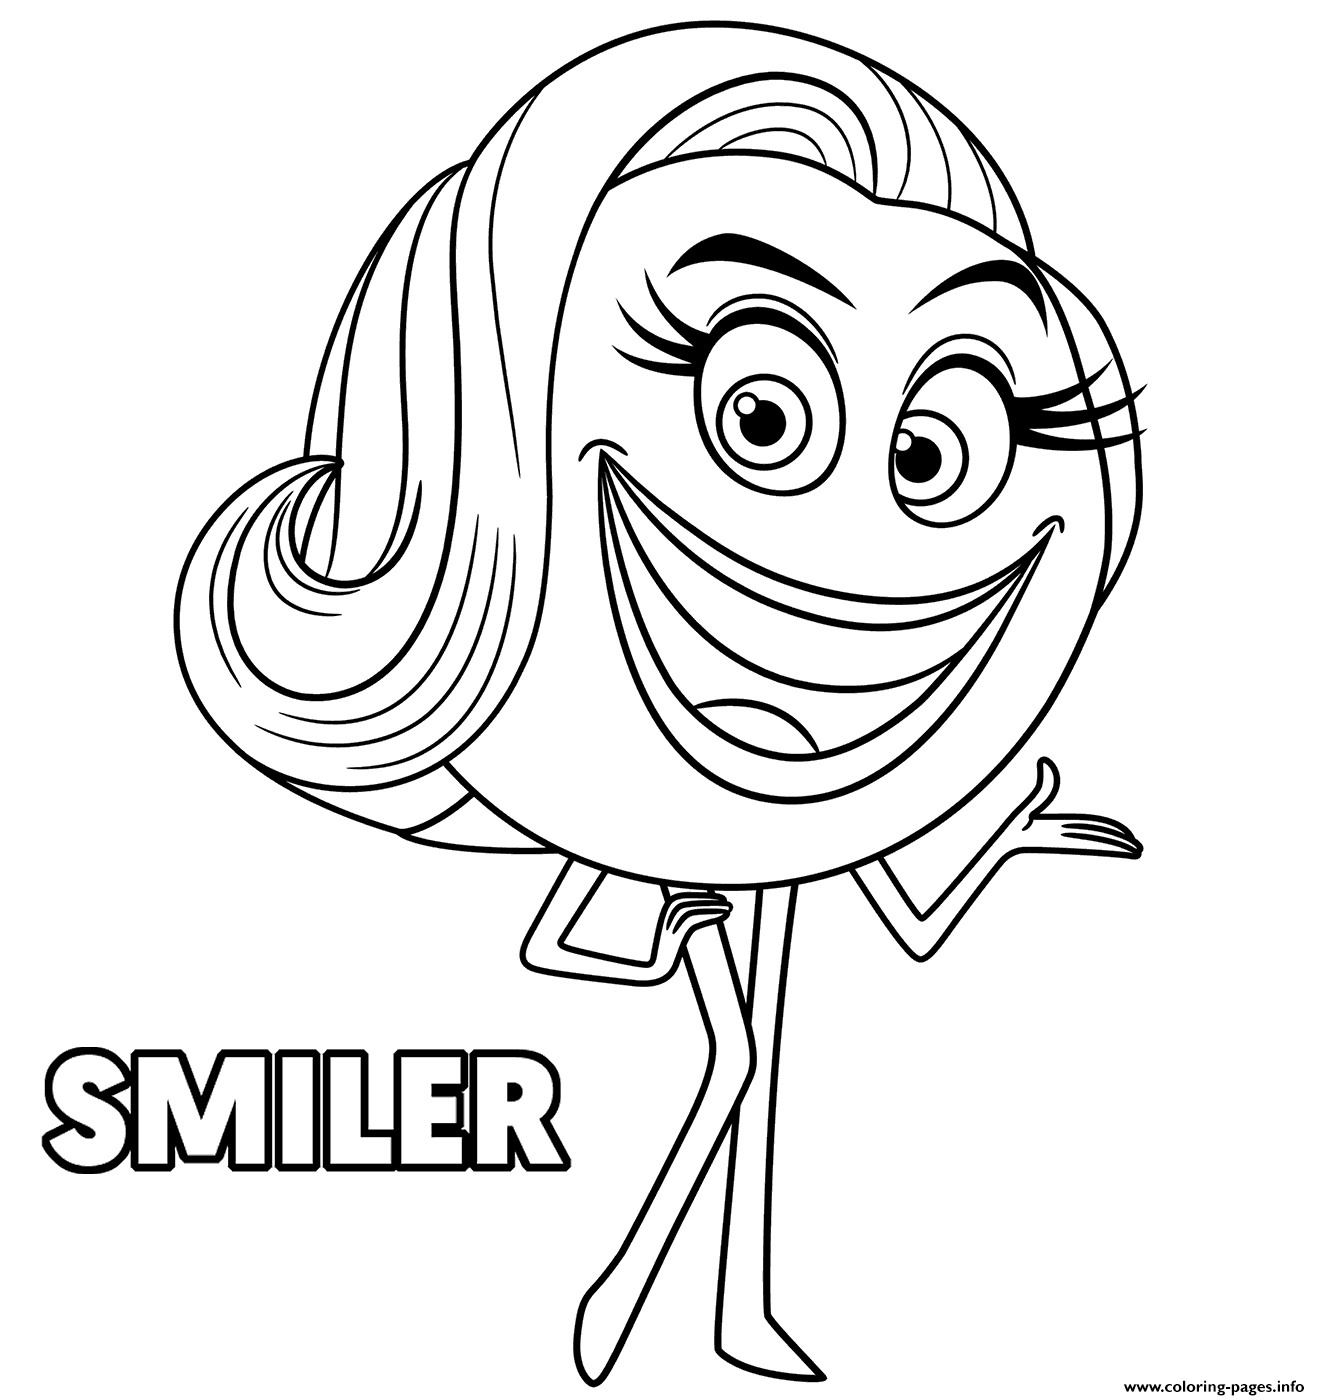 Smiler The Emoji Movie coloring